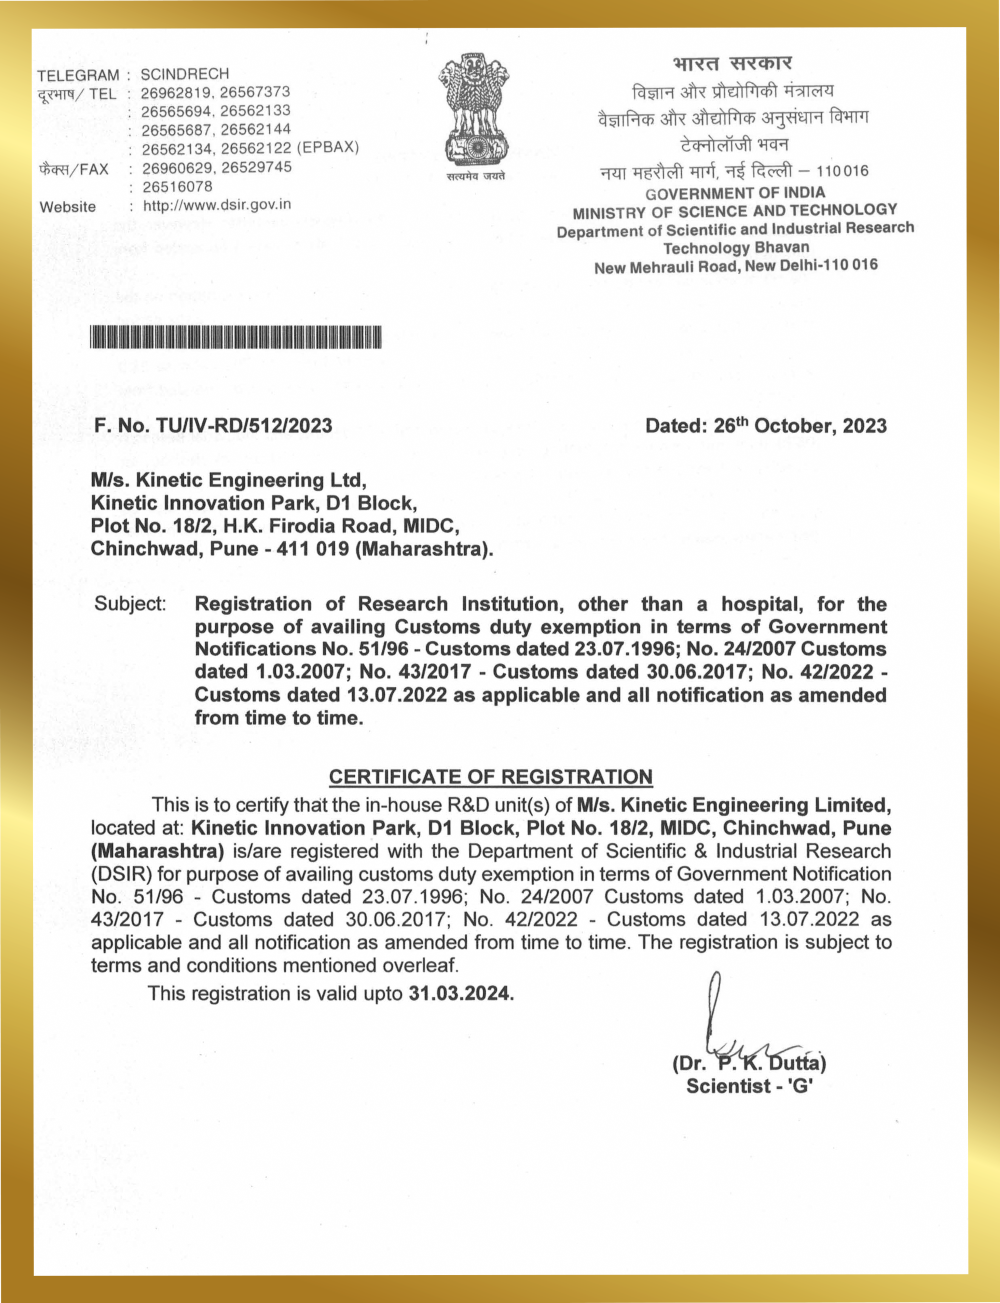 certificate-of-registration